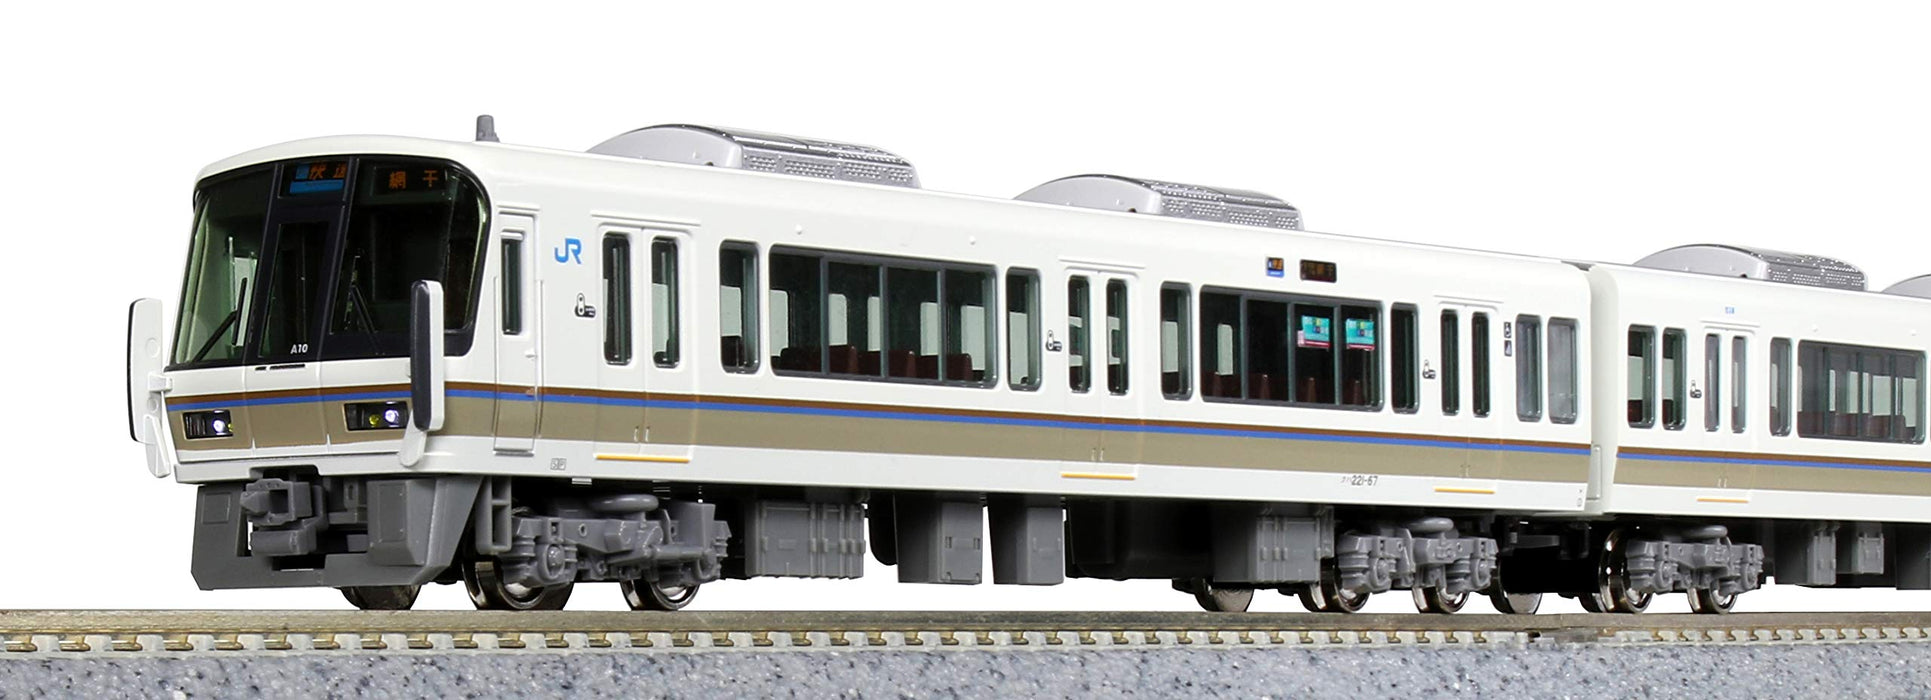 Kato 221 Series 8-Car Train Set N Gauge 10-1578 JR Kyoto/Kobe Line Model